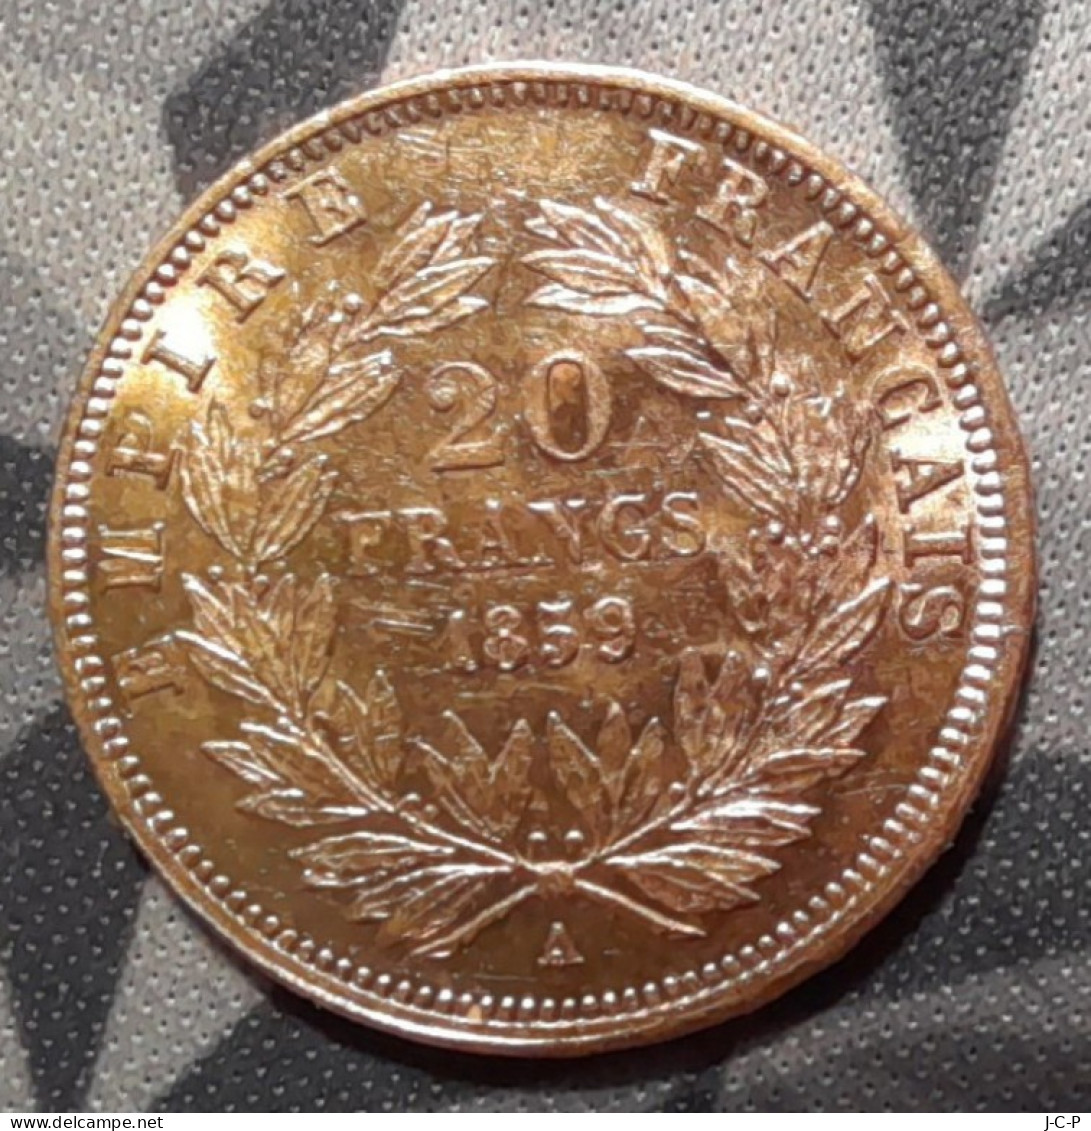 20 Francs Napoléon III Tête Nue 1859 A - 20 Francs (gold)